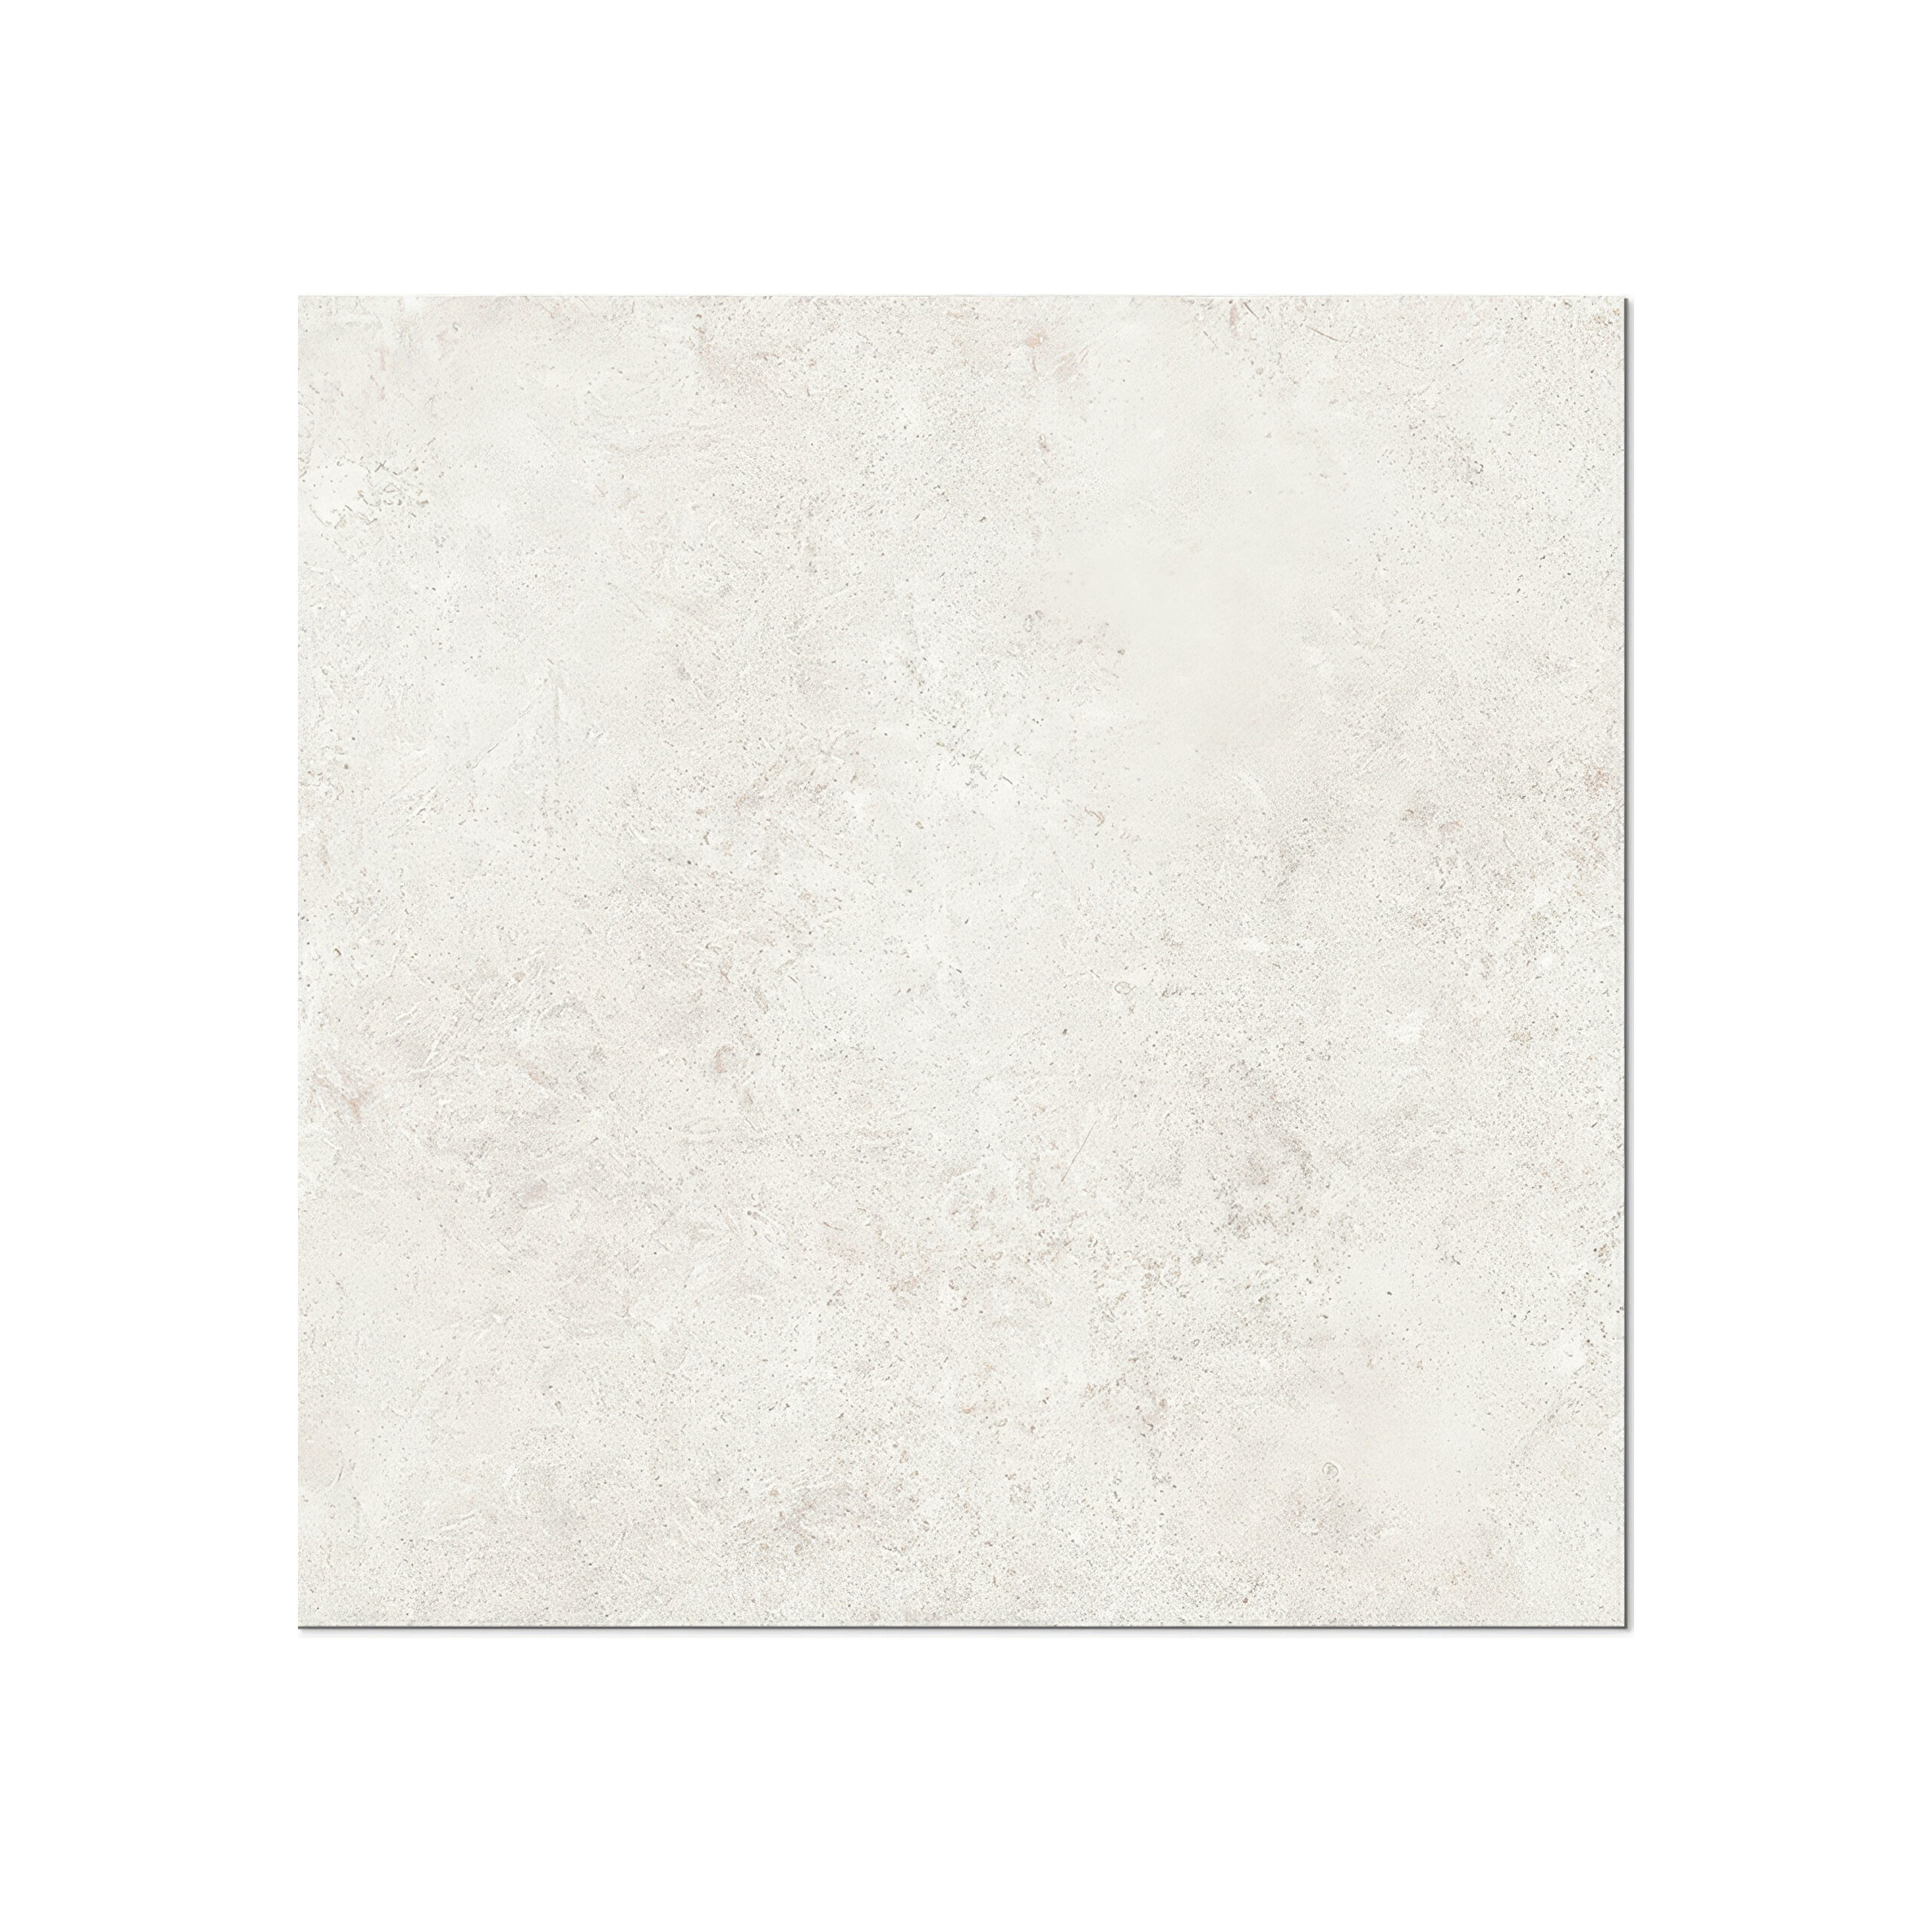 Onda White 48x48 Anti Slip Porcelain Tile 01